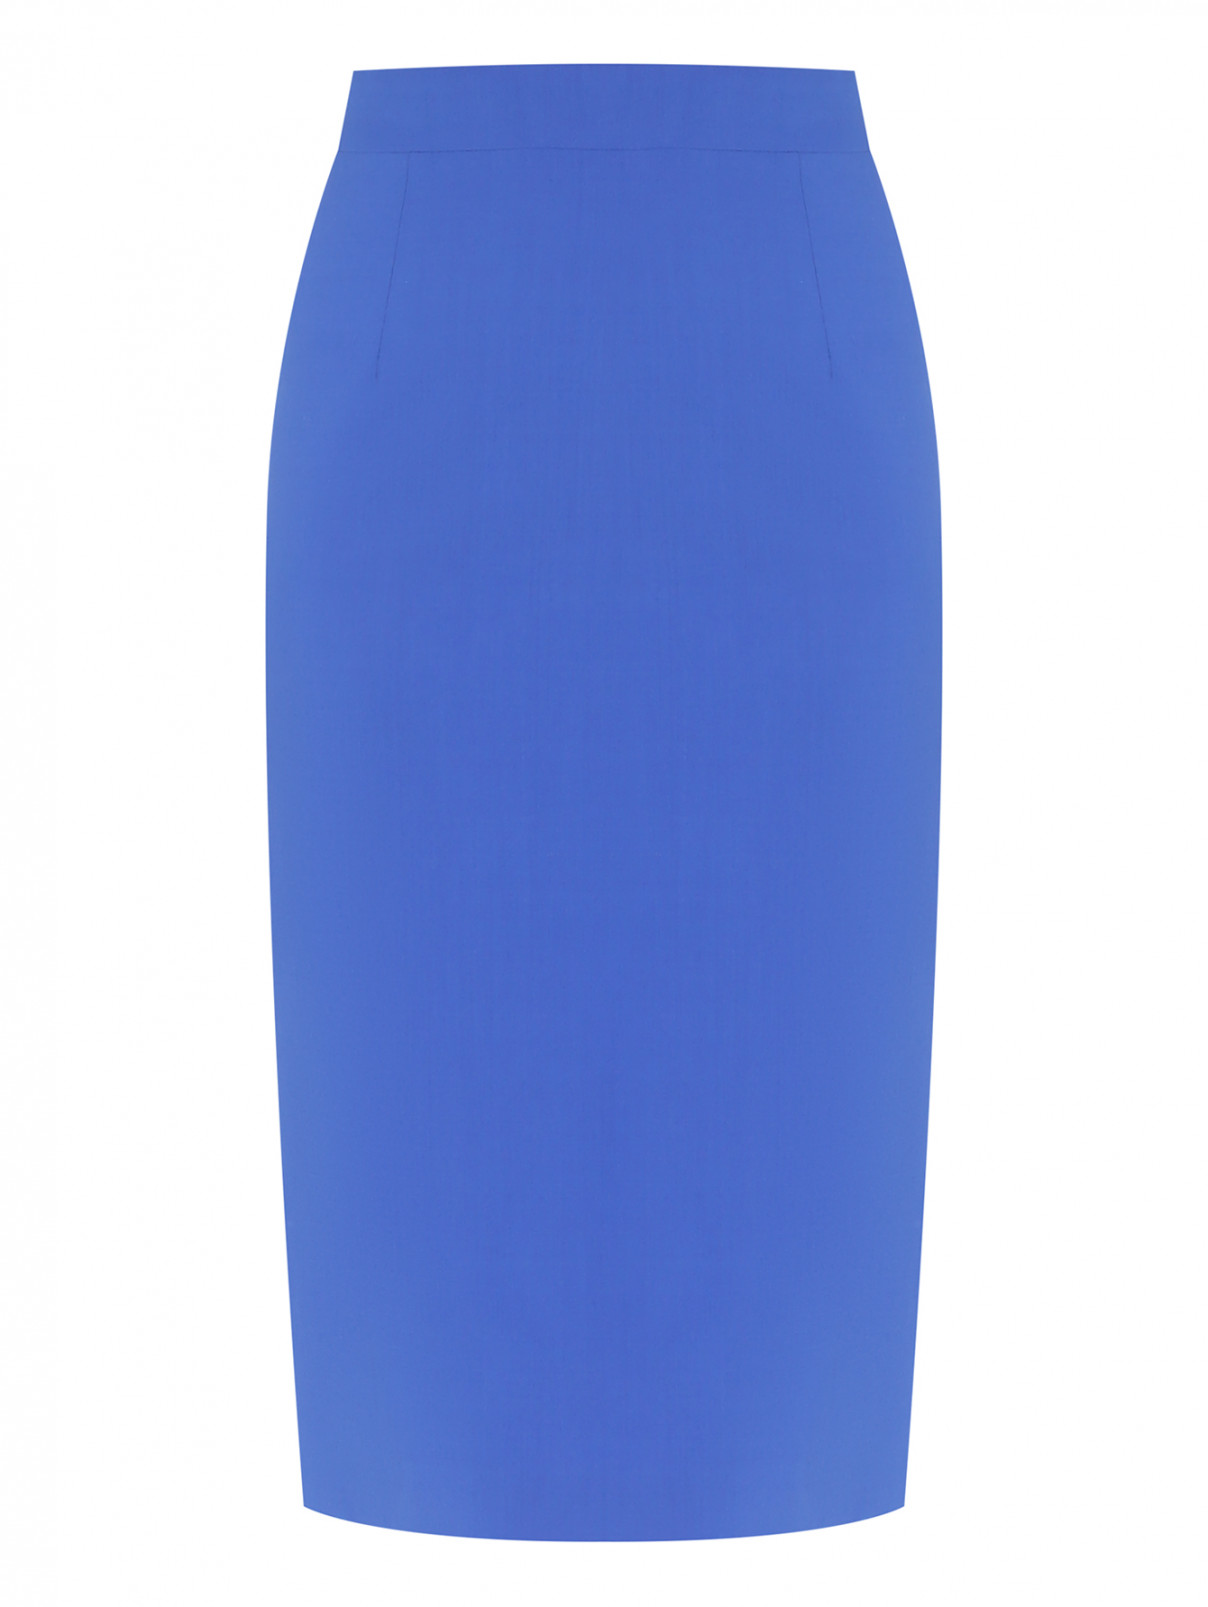 Юбка-карандаш из смешанной шерсти Alberta Ferretti  –  Общий вид  – Цвет:  Синий